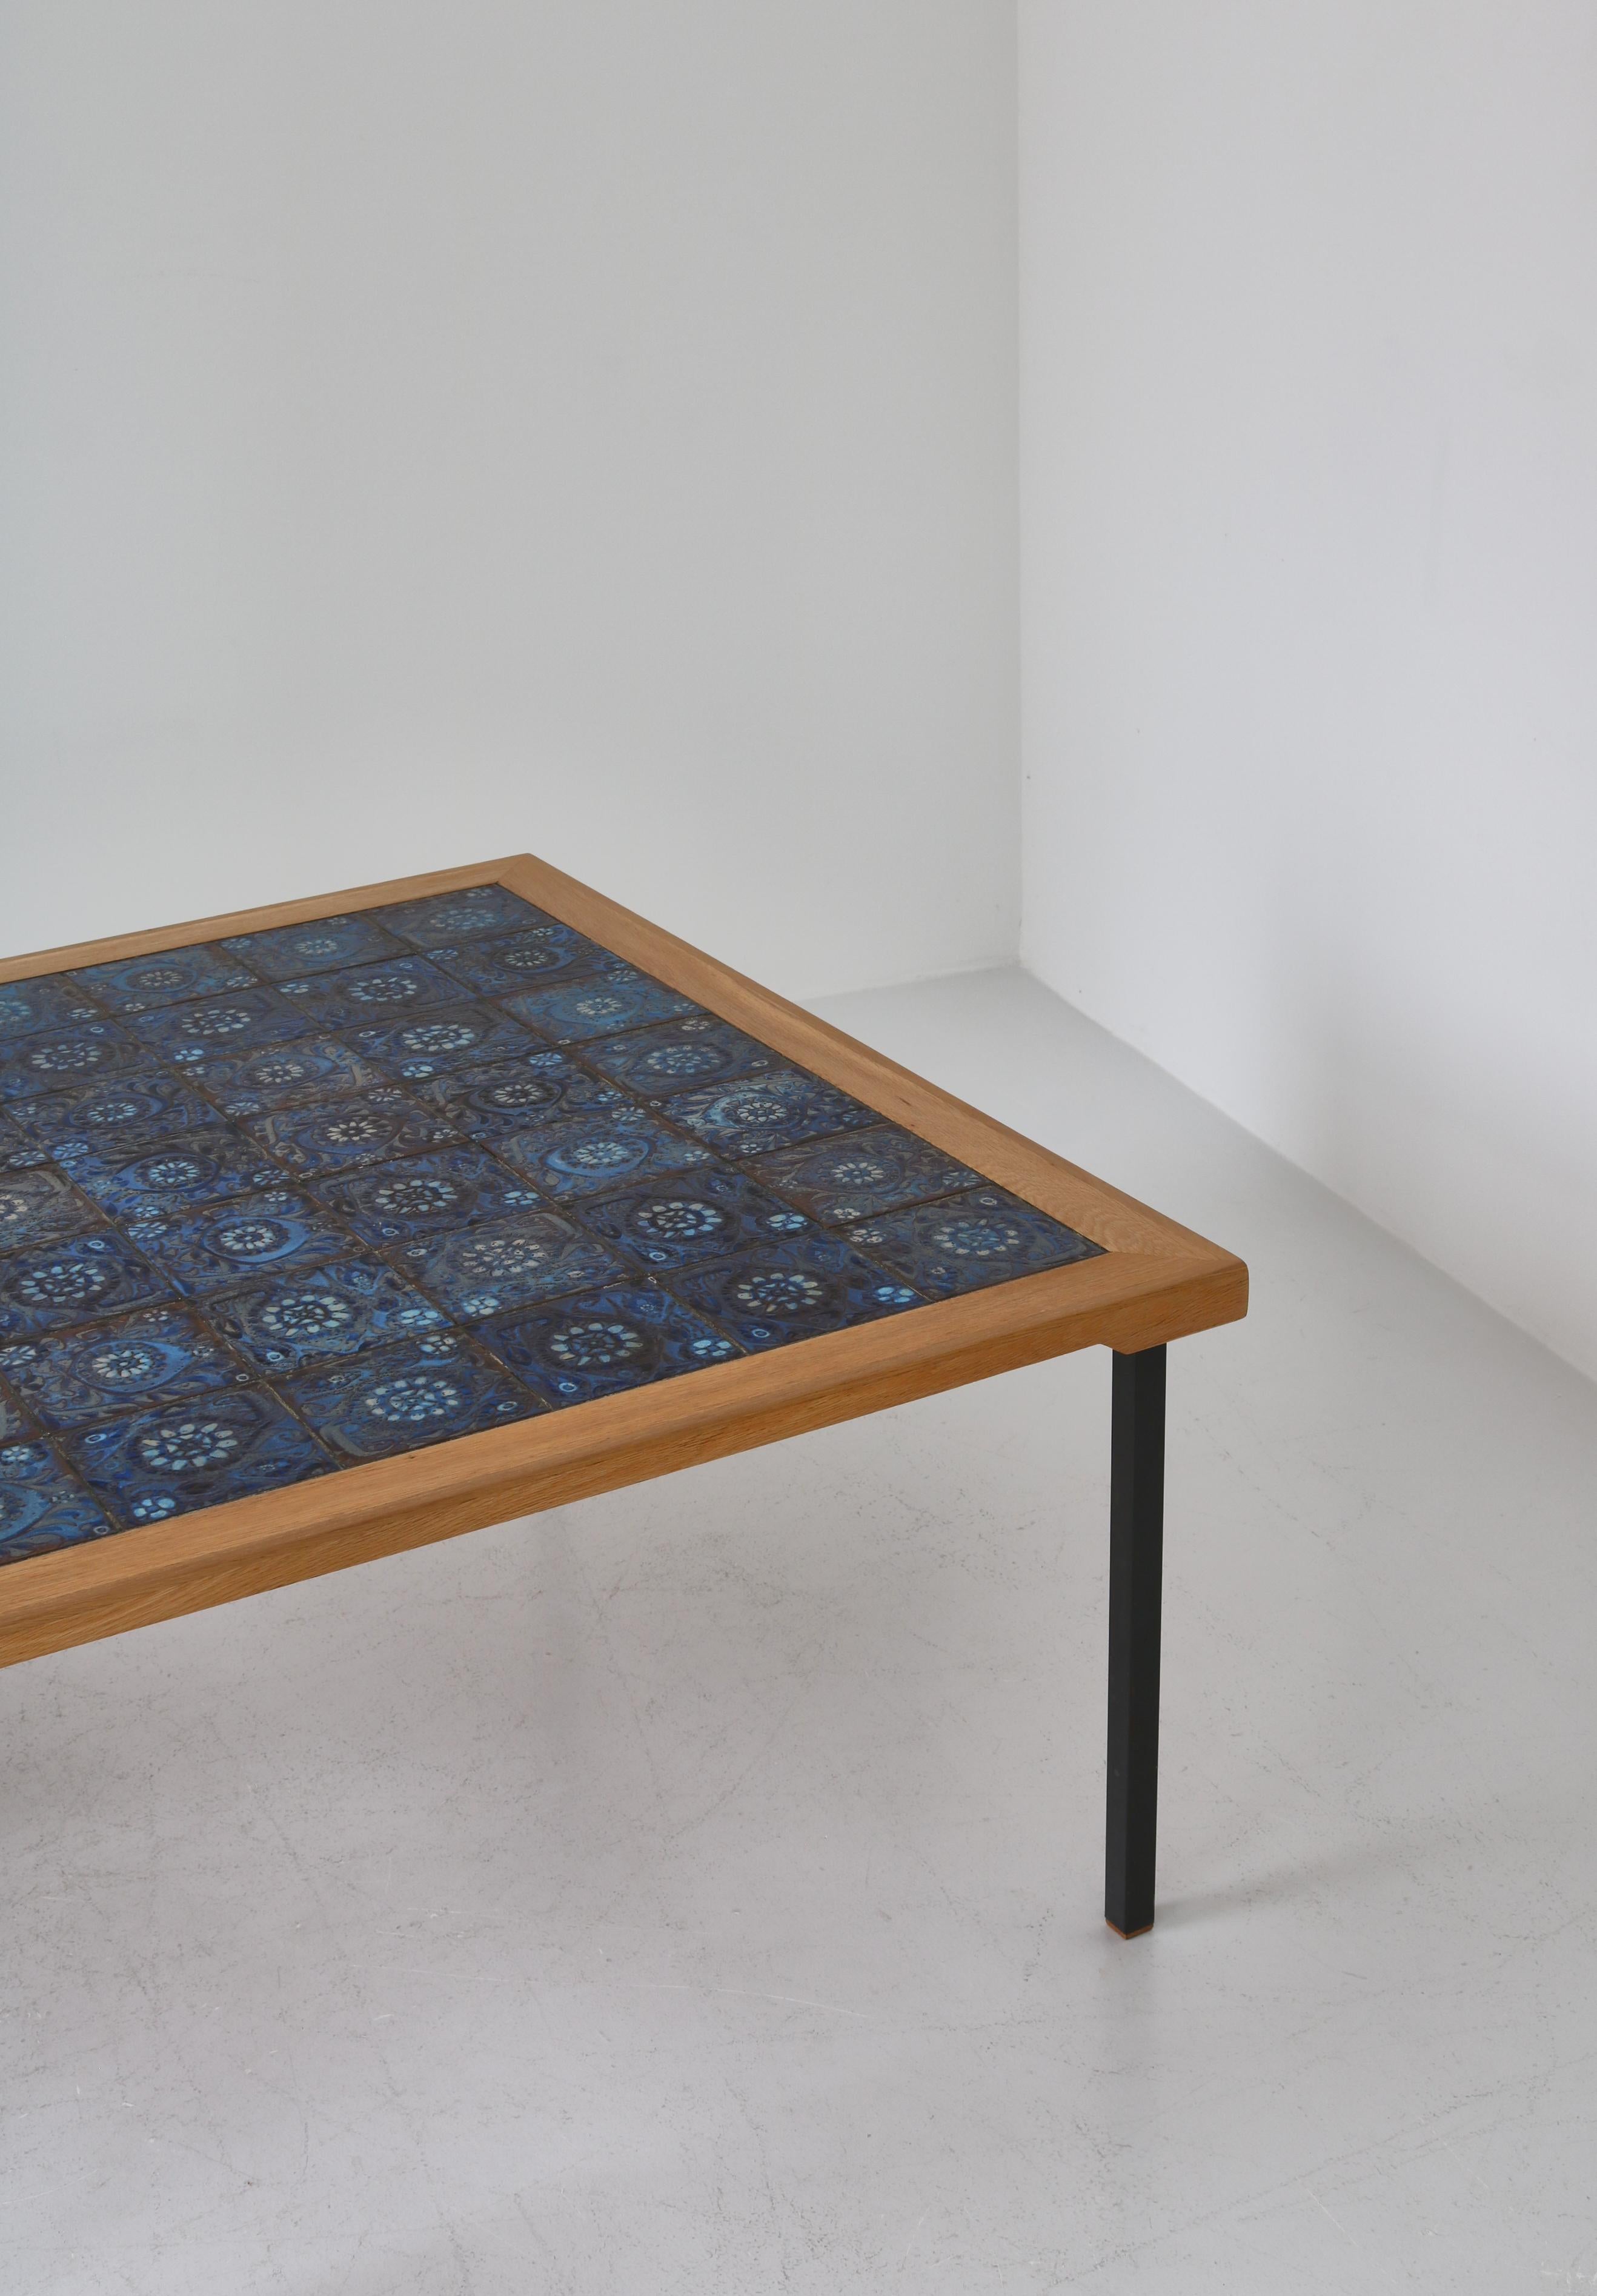 Danish Scandianvian Modern Square Table in Oak Wood with Blue Ceramic Tiles, 1960s